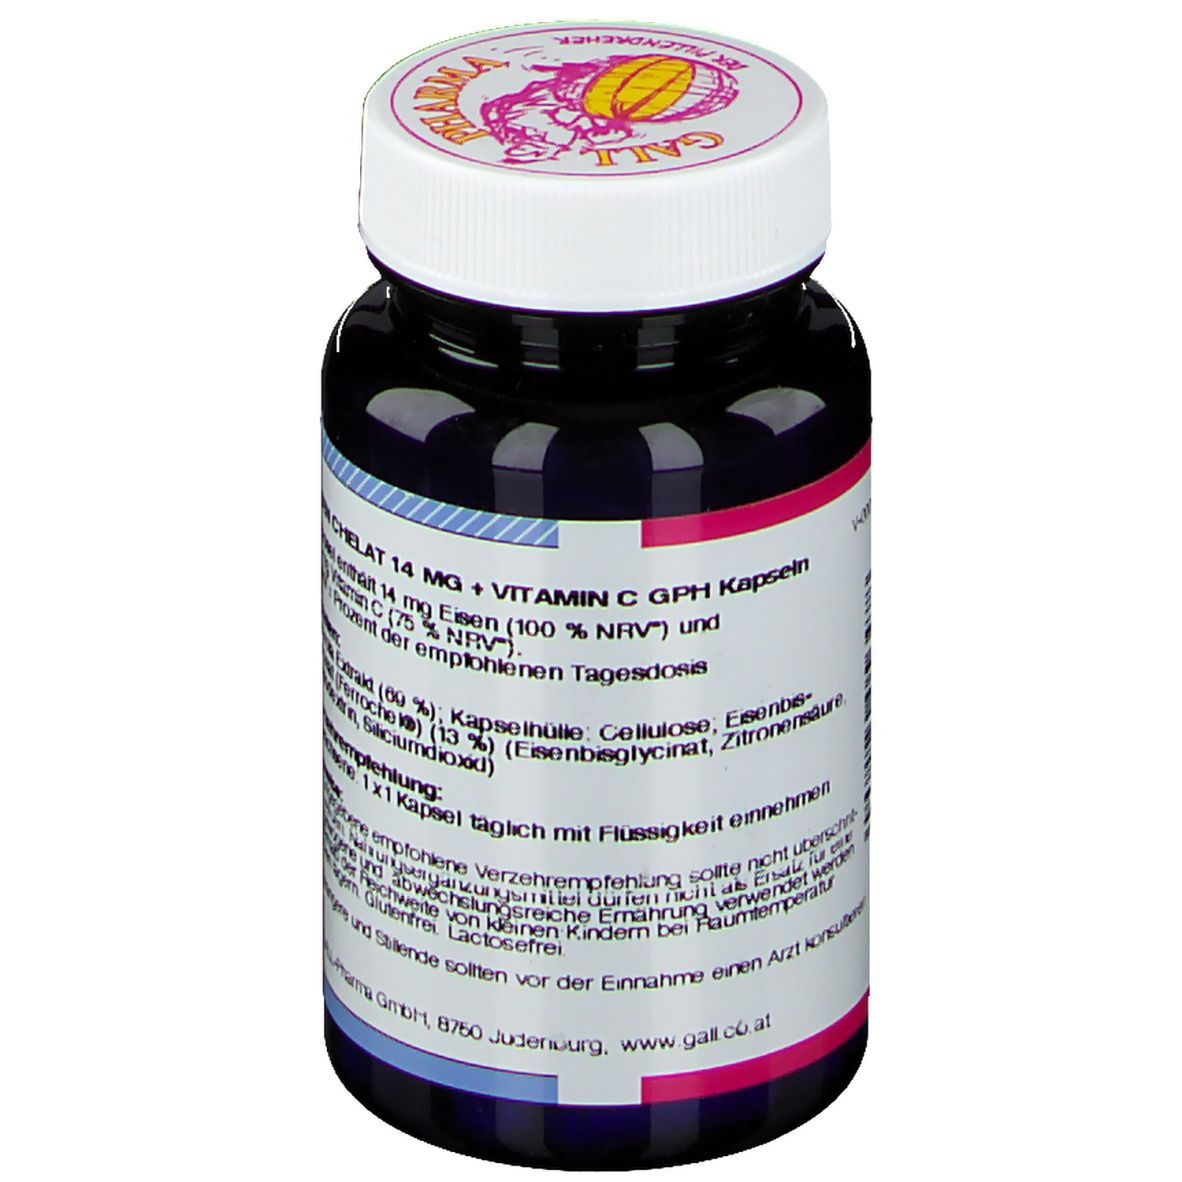 Eisen Chelat 14 mg + Vitamin C GPH